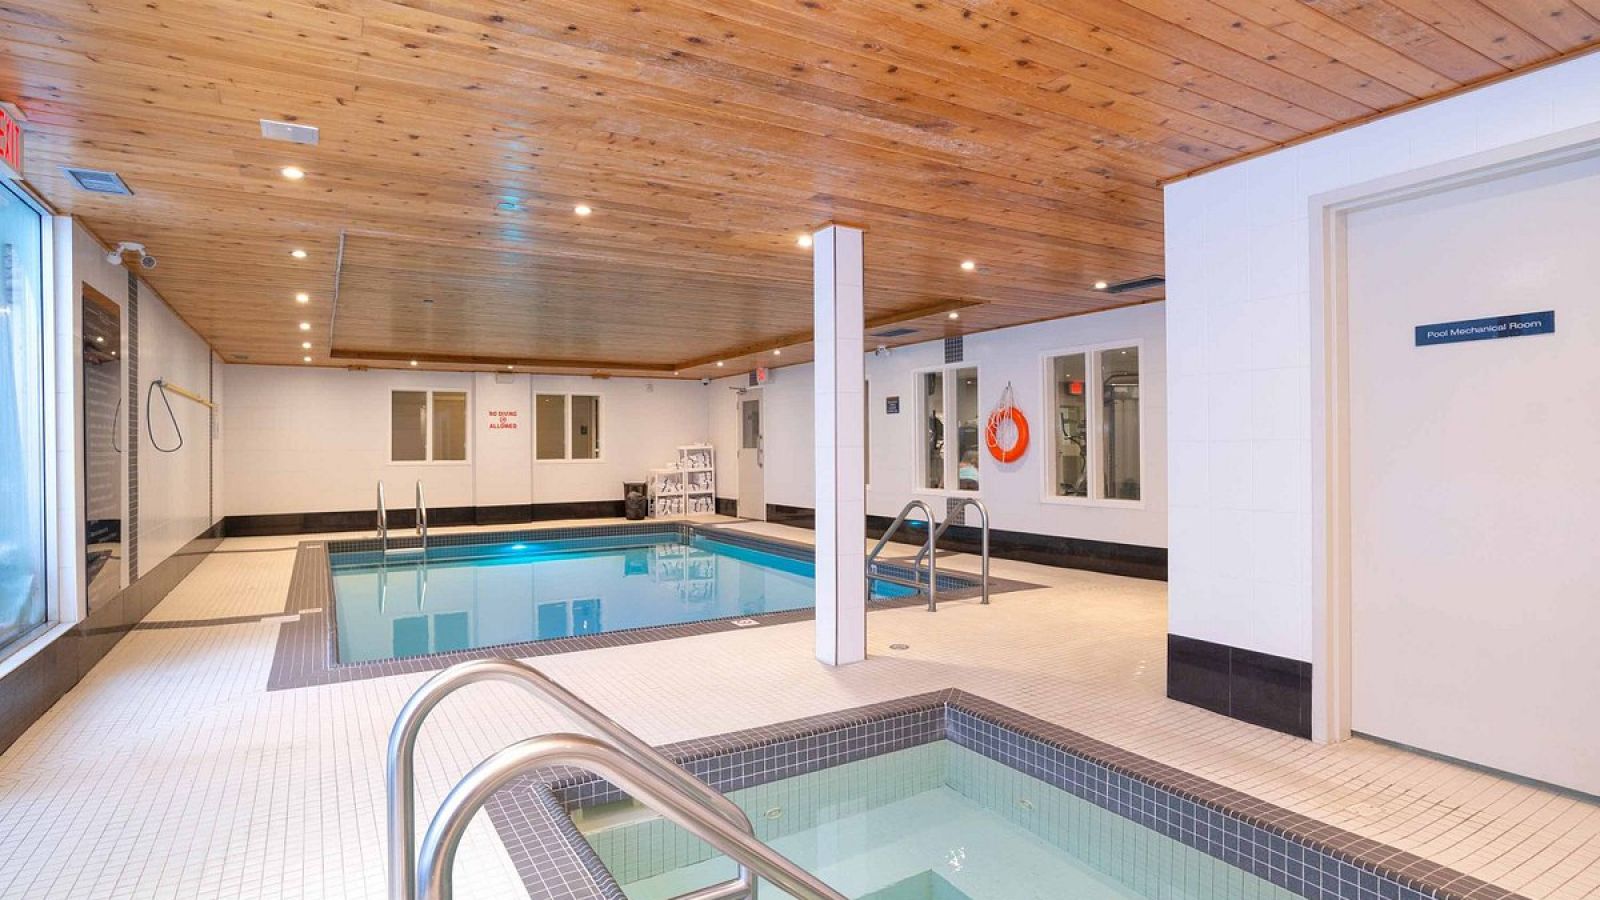 Sandman Hotel & Suites Calgary West - Swimming Pool Area